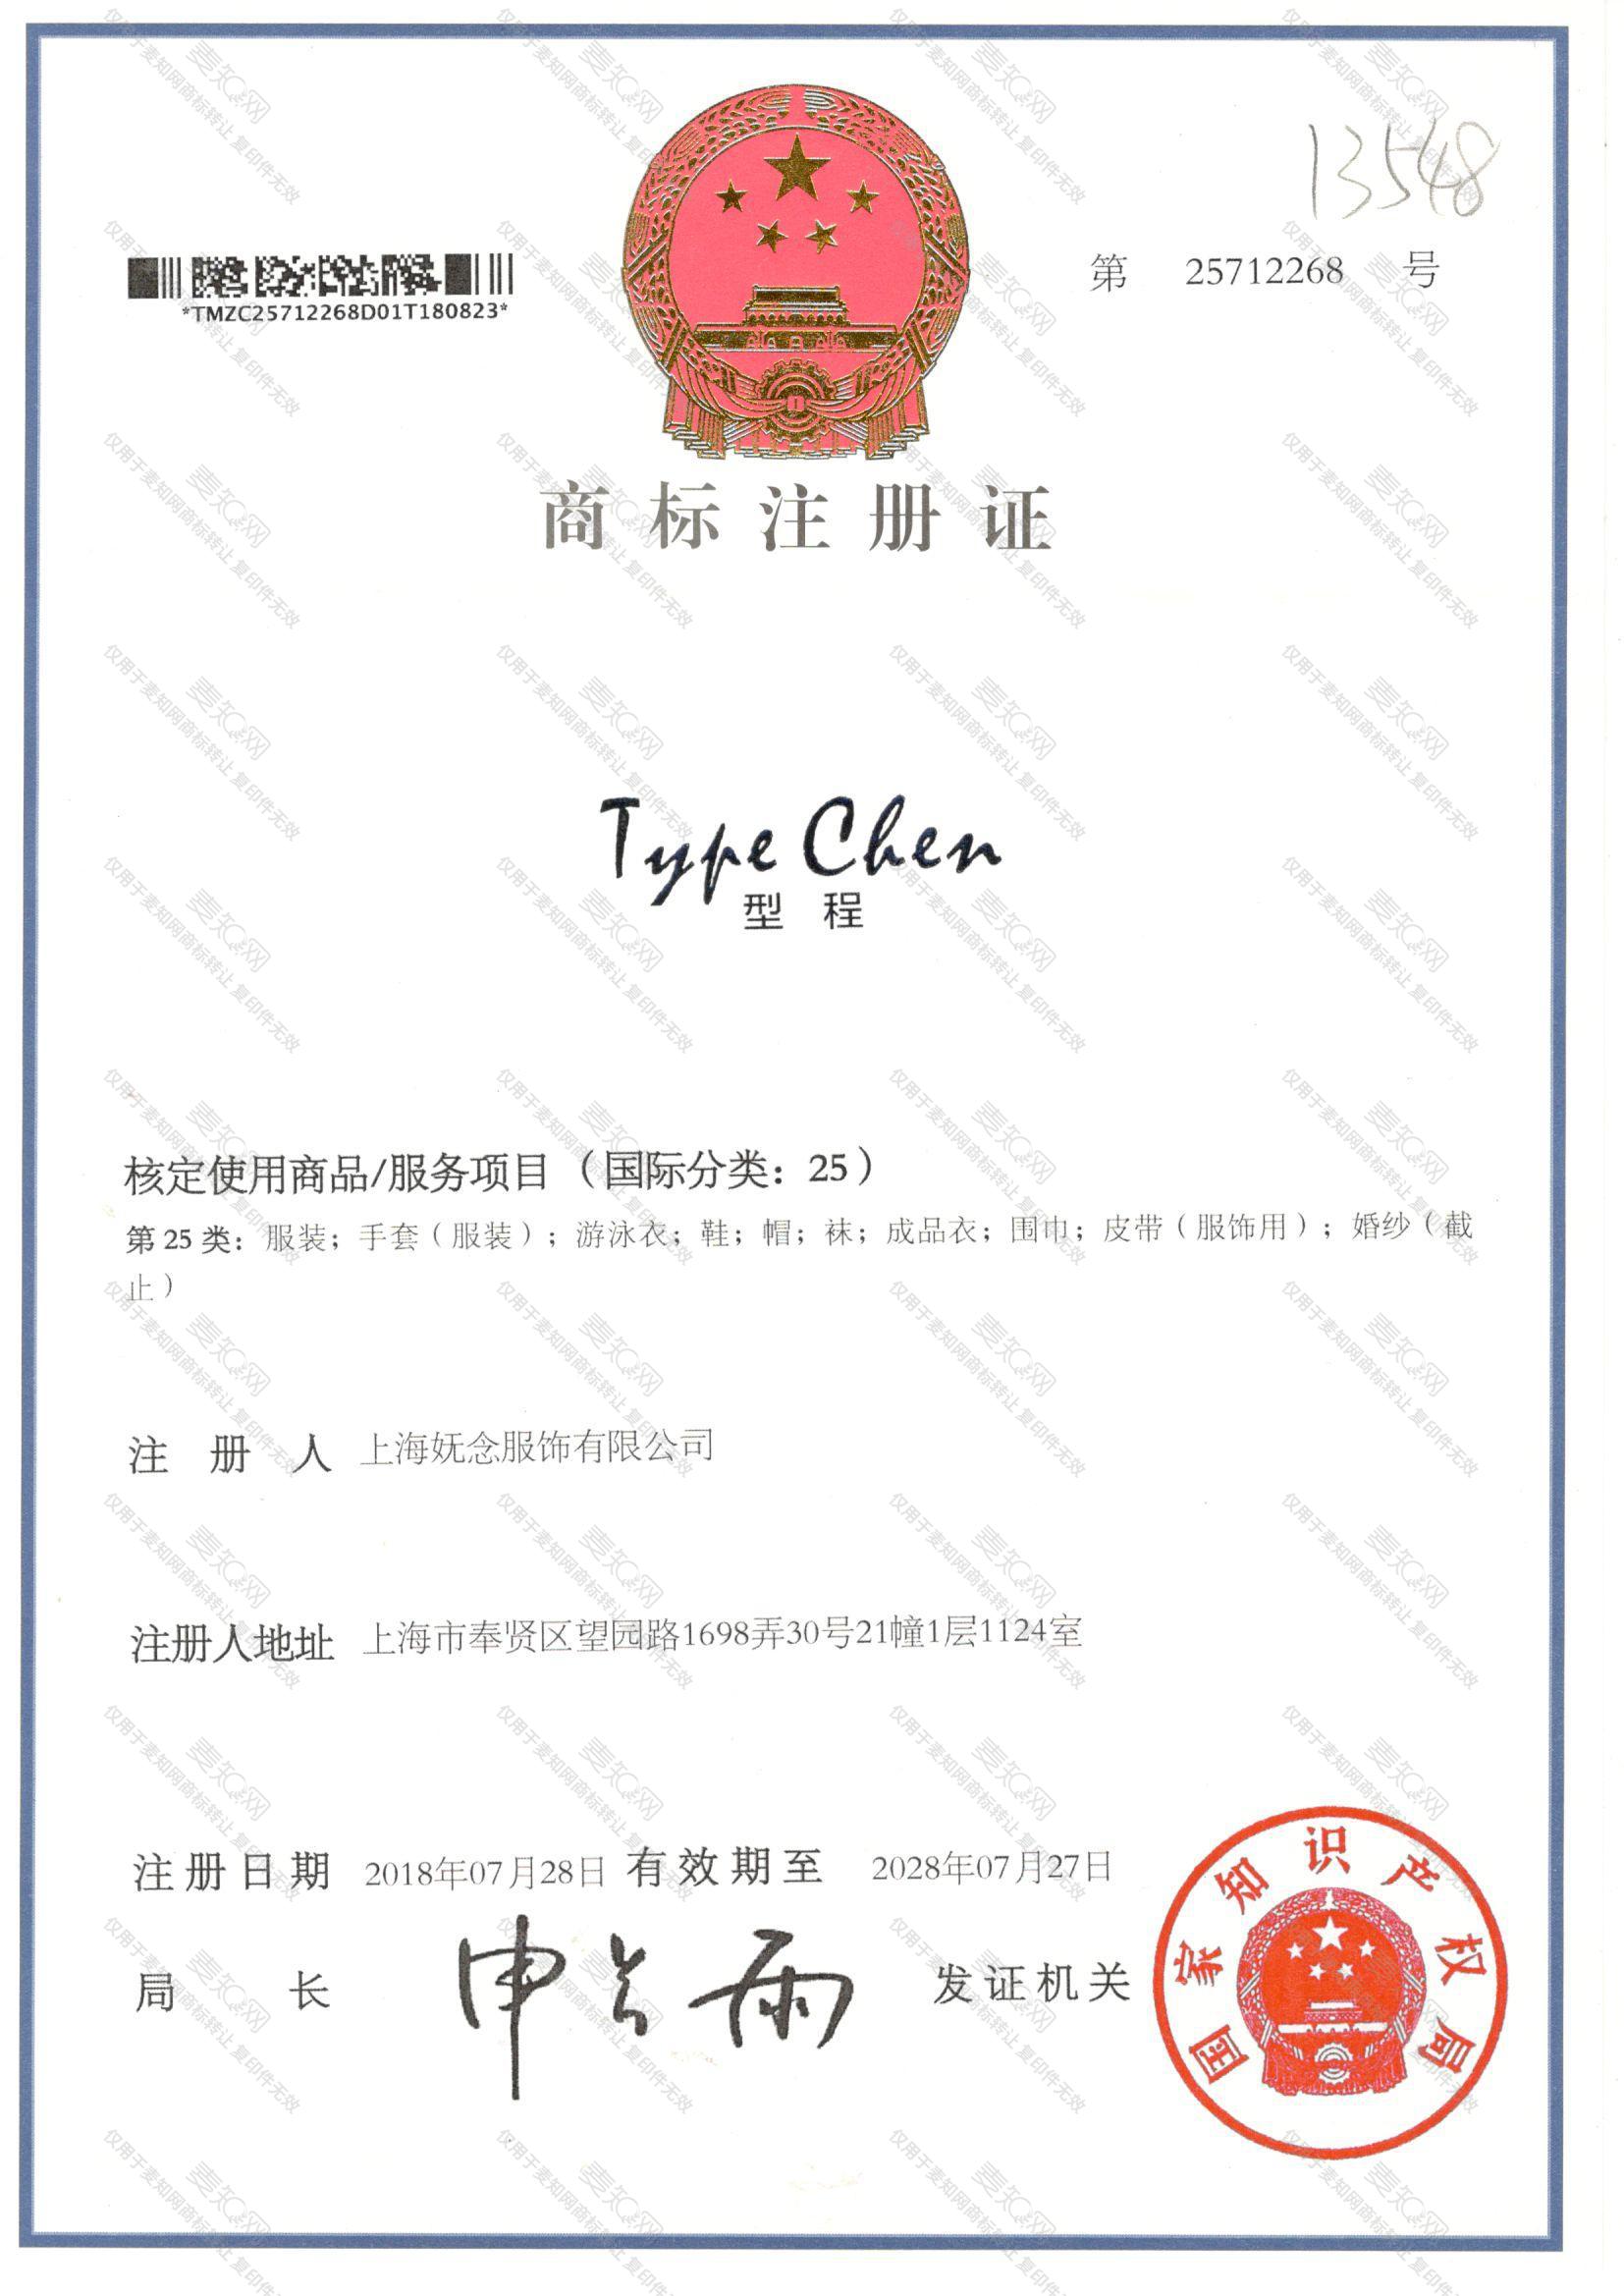 型程 TYPE CHEN注册证